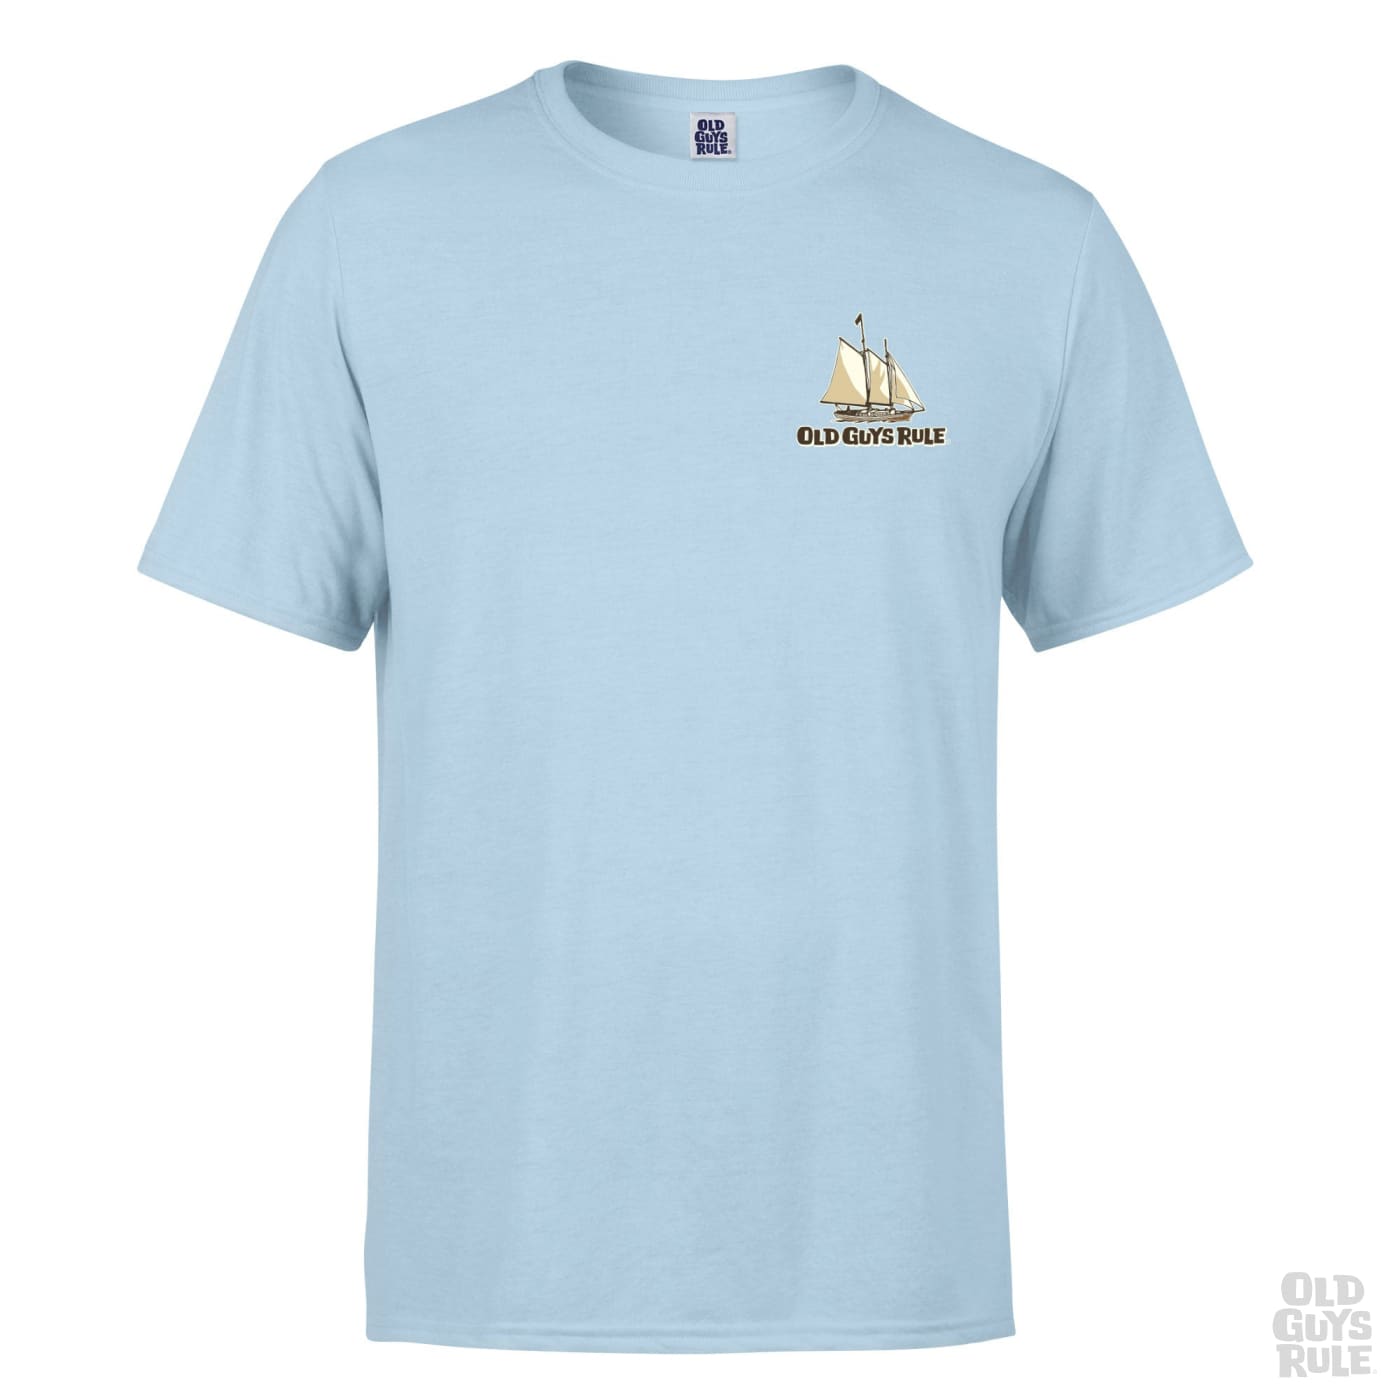 Old Guys Rule Sailing Through Life T-Shirt - Light Blue